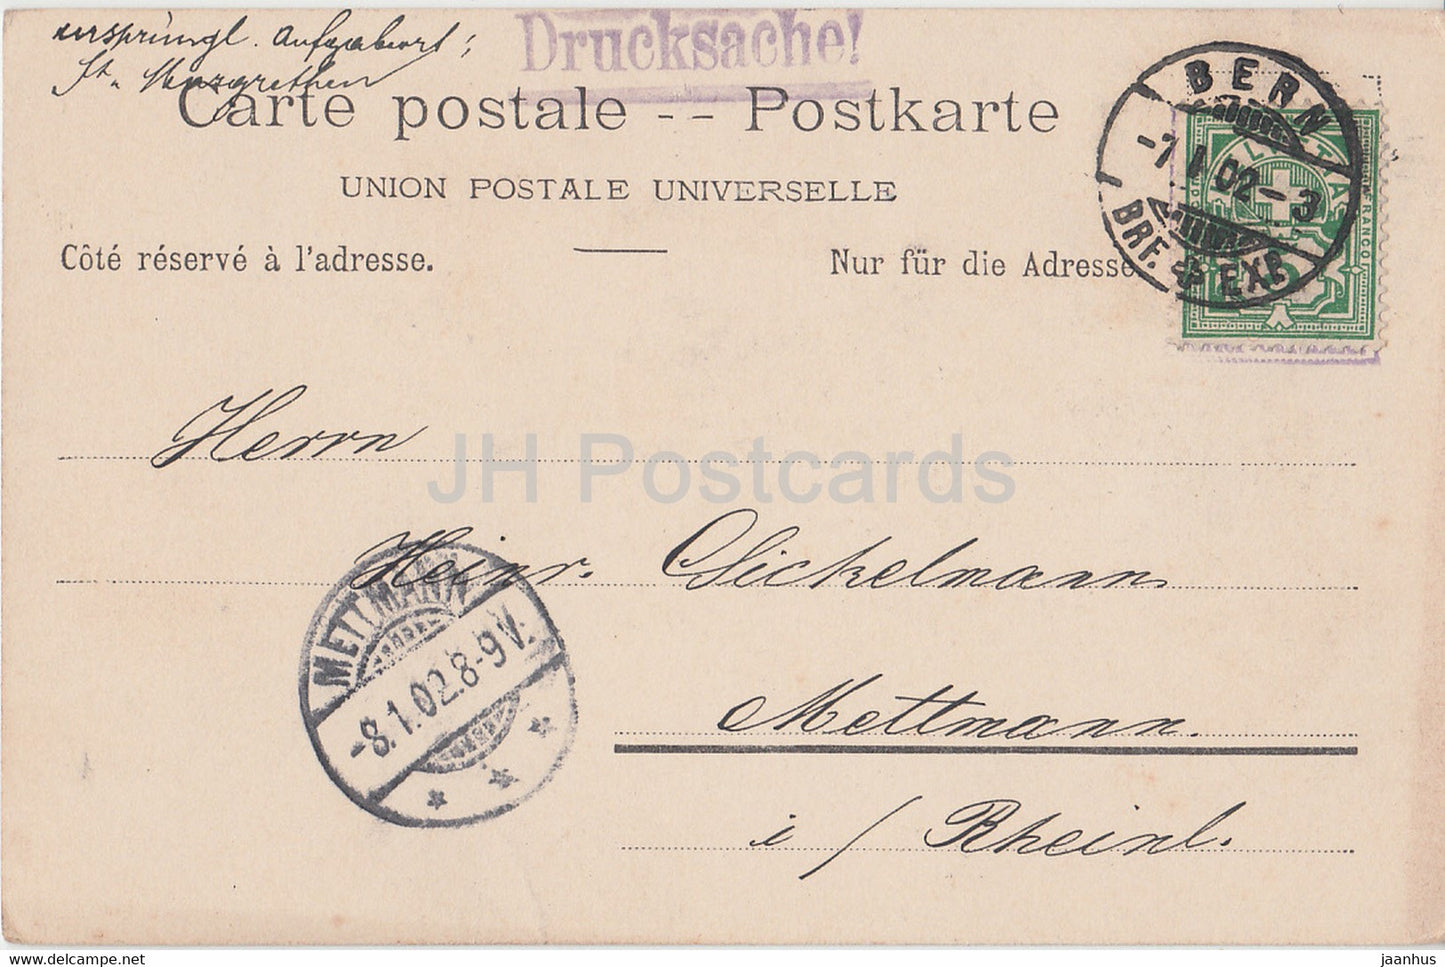 Berne - Berne - Kornhausbrucke - pont - 450 - carte postale ancienne - 1902 - Suisse - utilisé